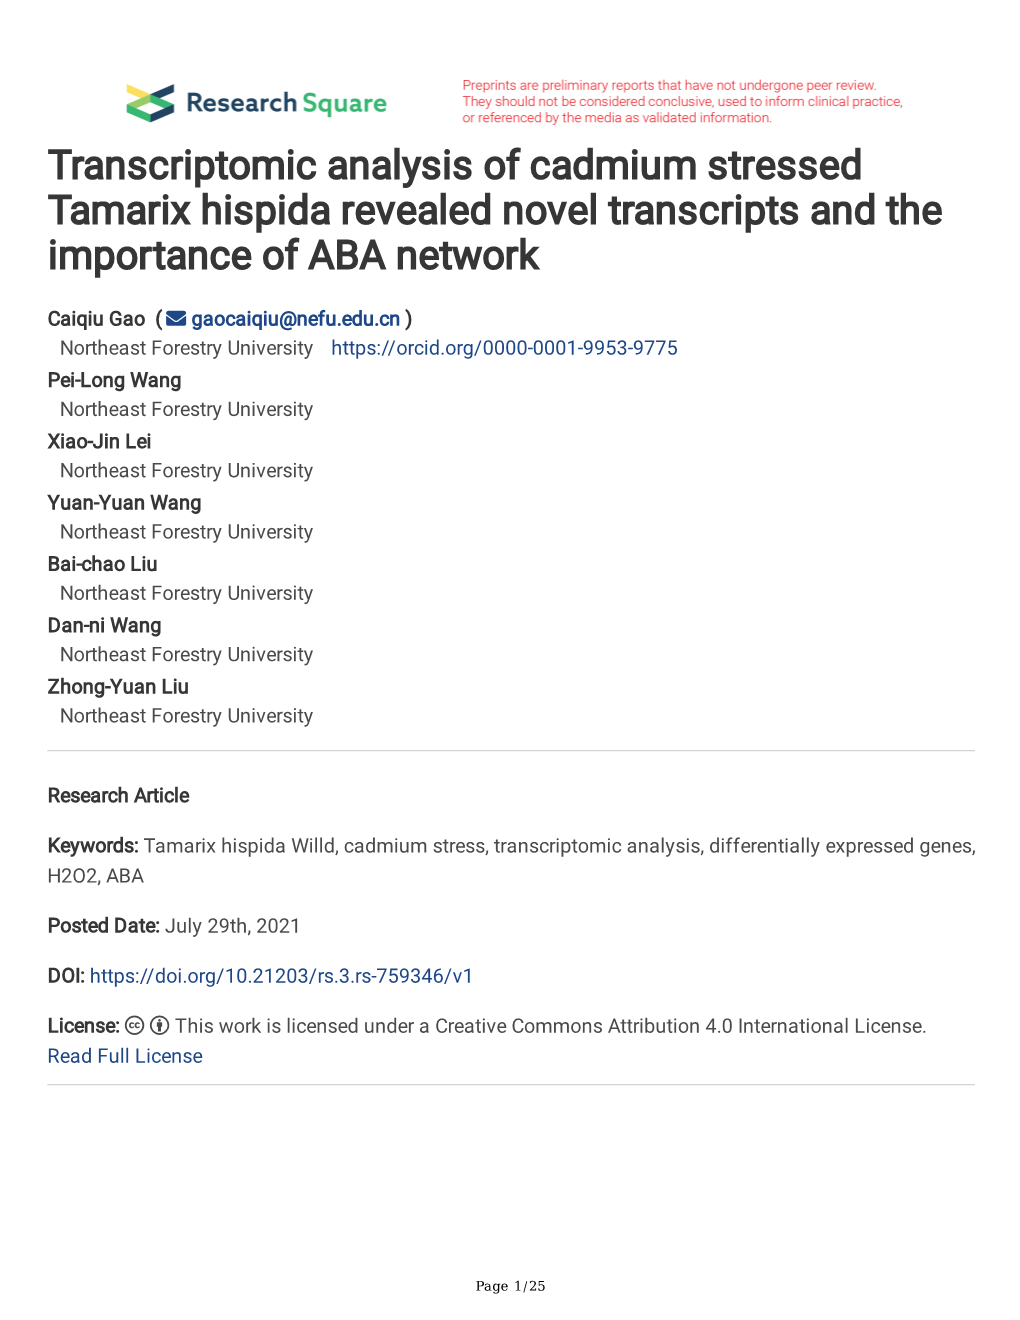 Transcriptomic Analysis of Cadmium Stressed Tamarix Hispida Revealed Novel Transcripts and the Importance of ABA Network